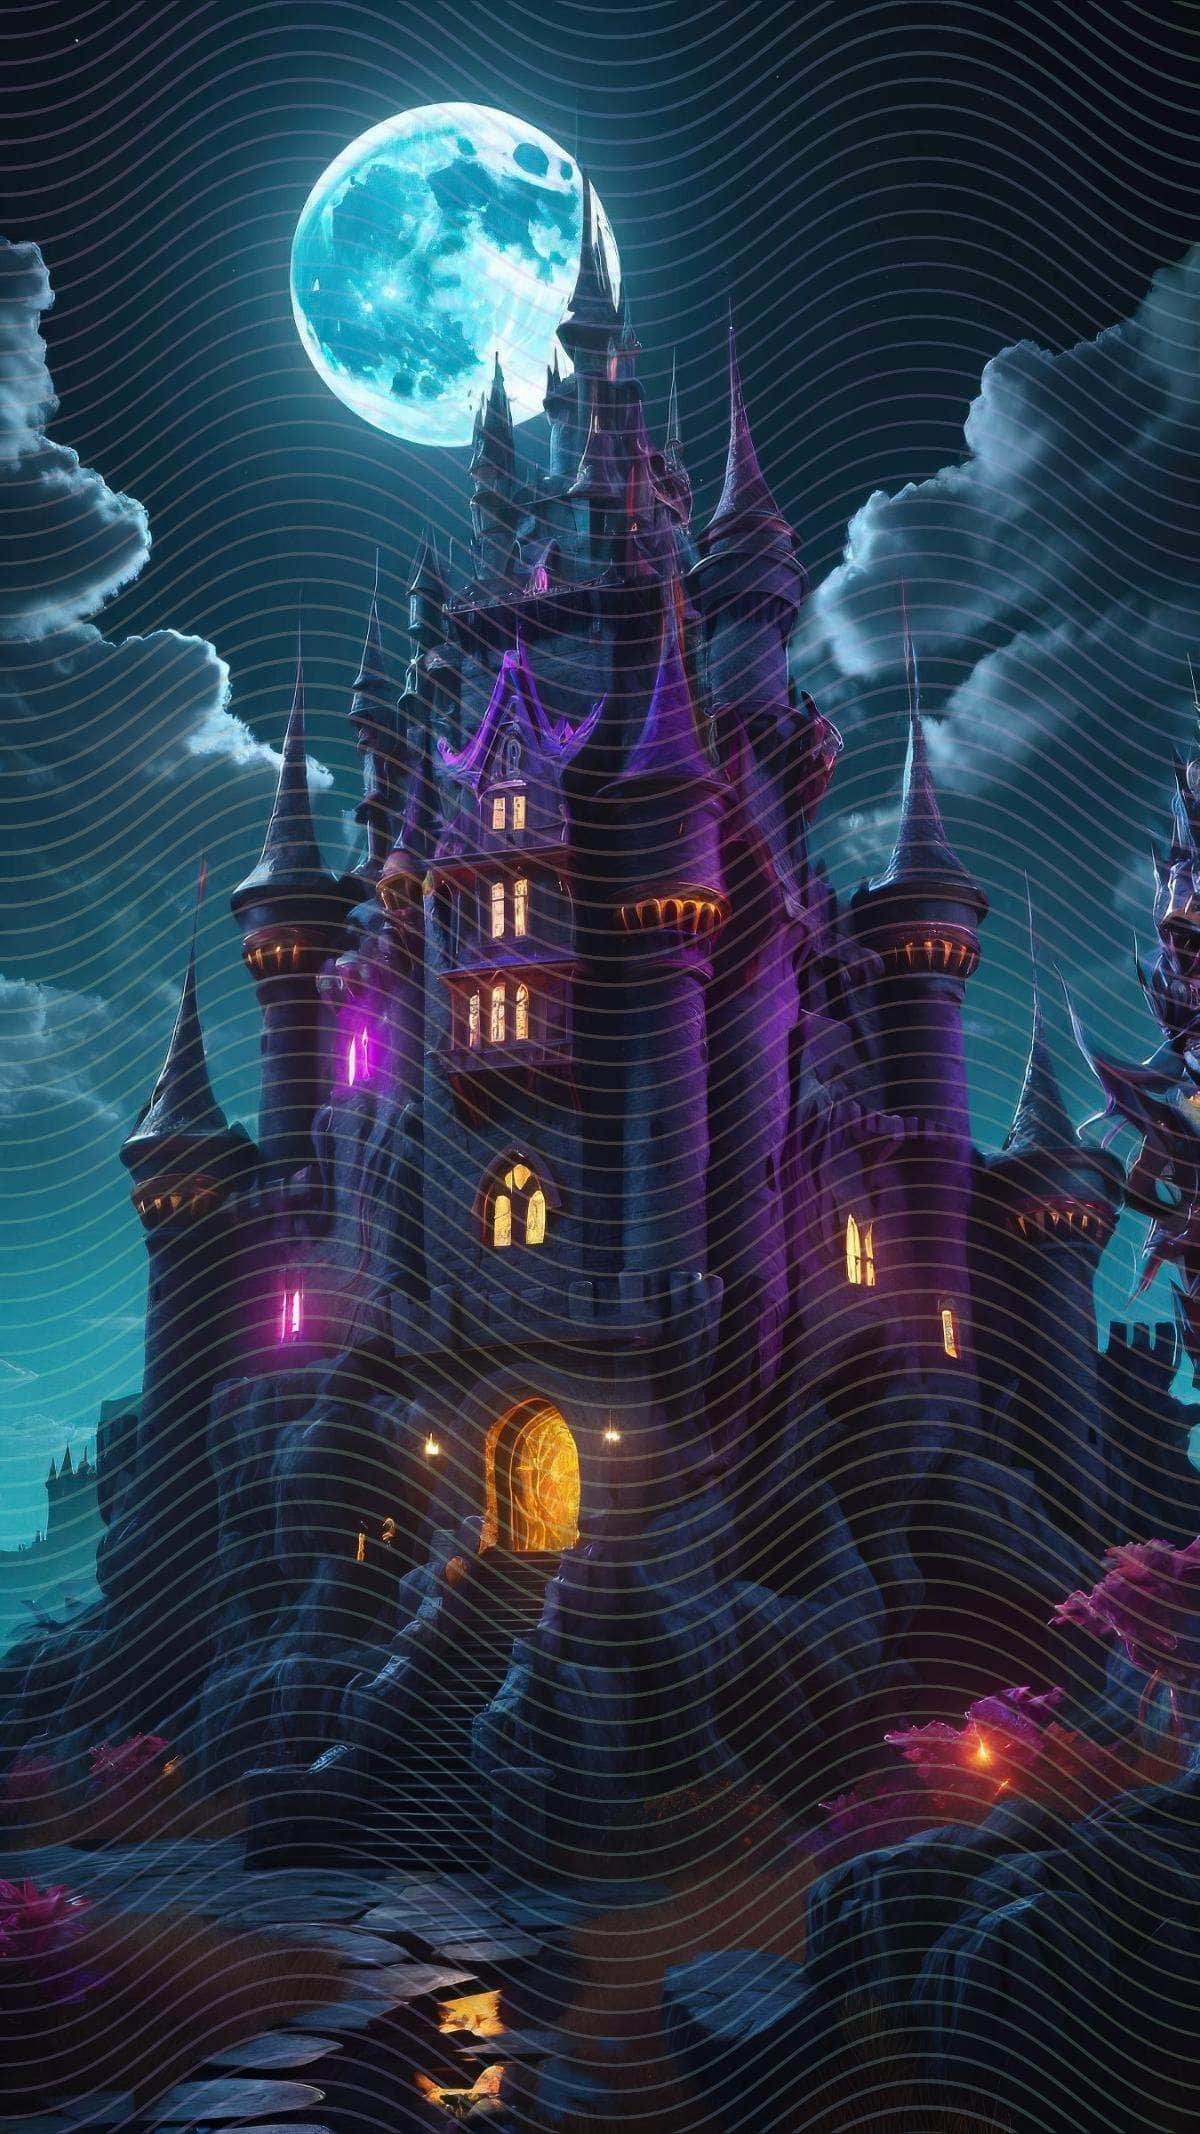 Fairy Tale Magical Castle- Enchanting Wonder